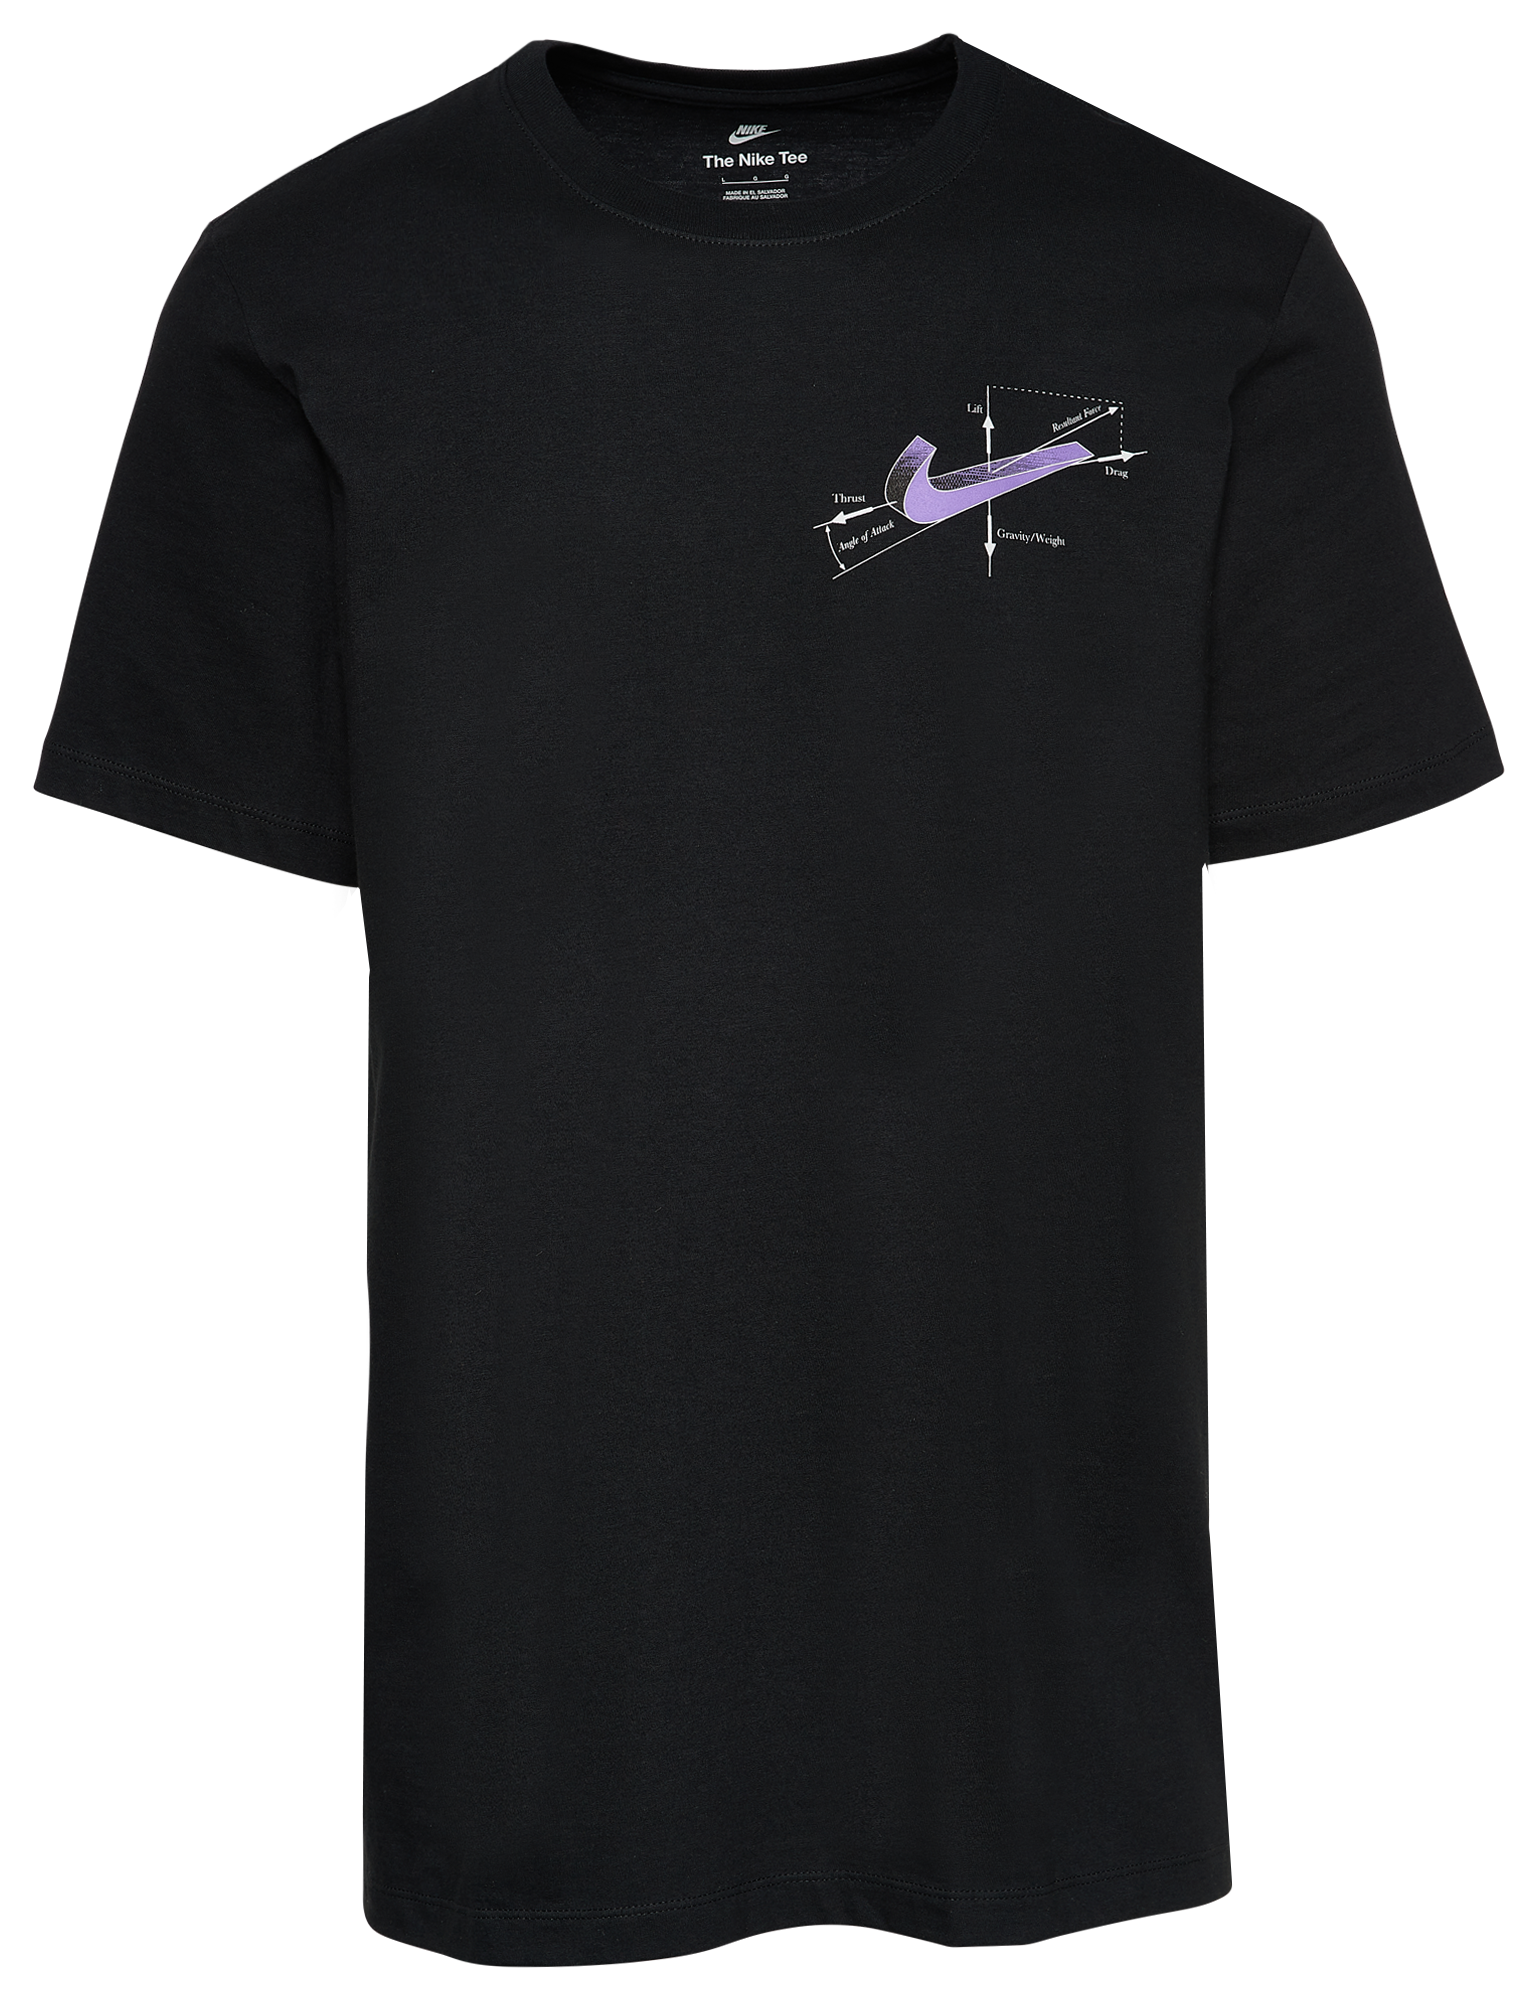 Nike Swept Wing T-Shirt - Men's